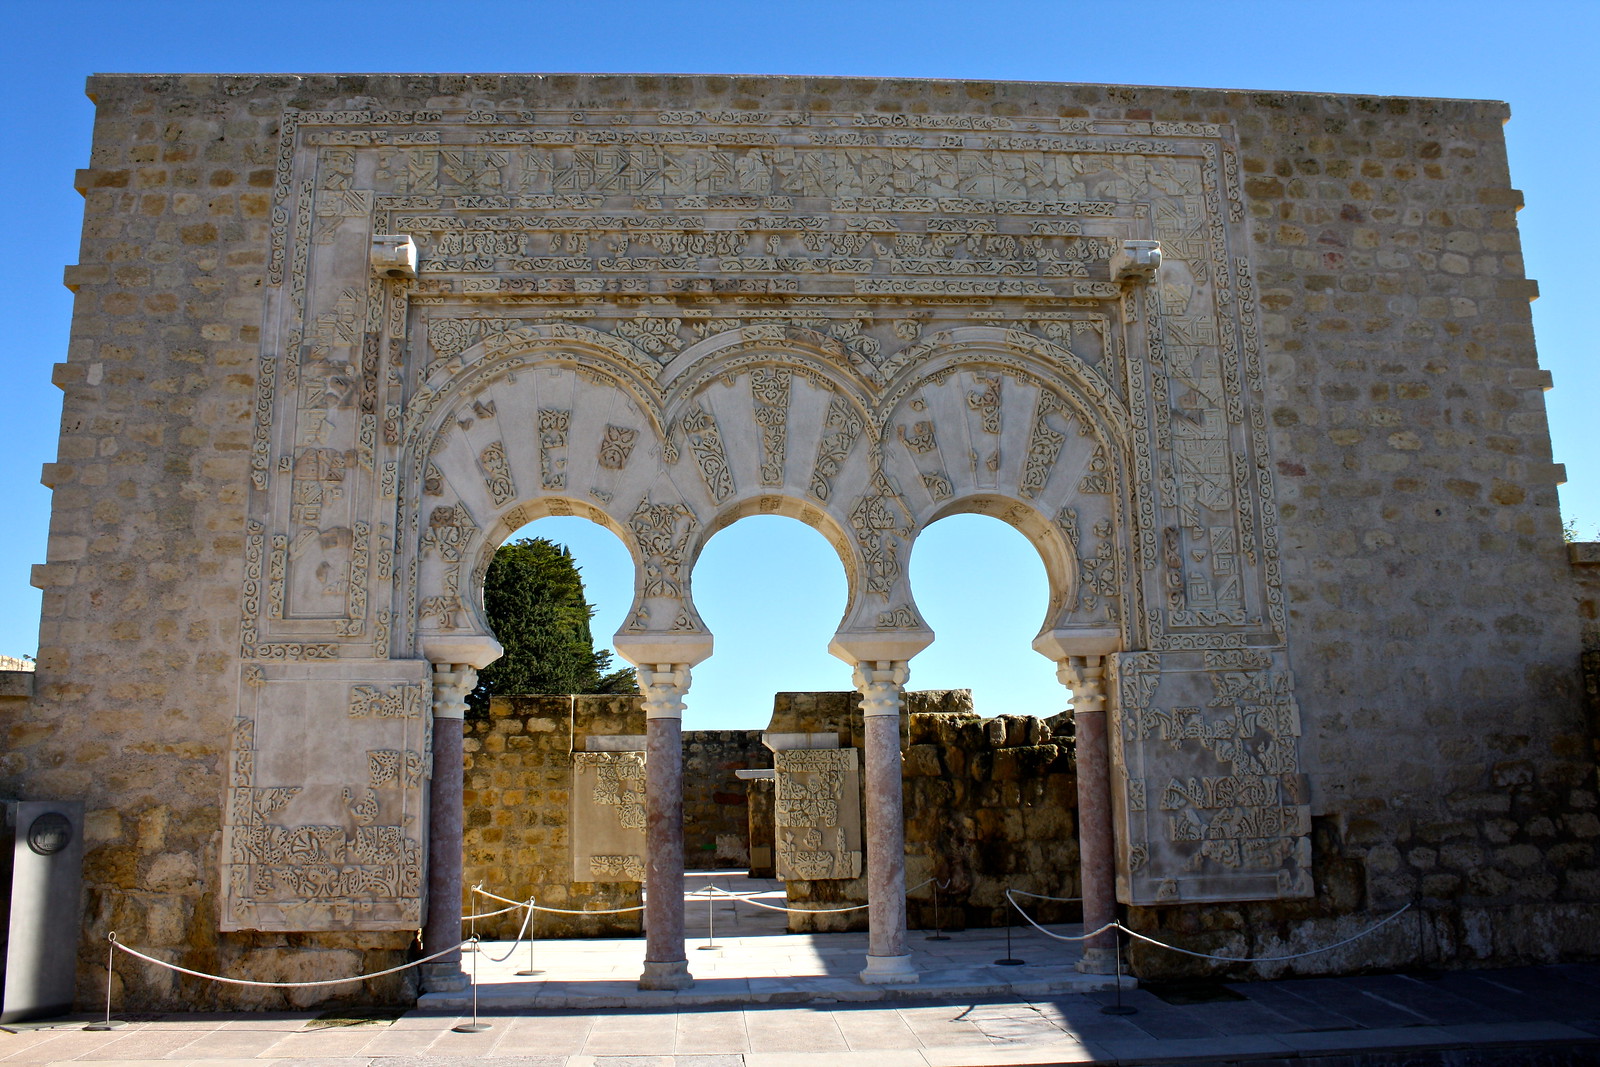 Ruins of Madinat al-Zahra, Spain